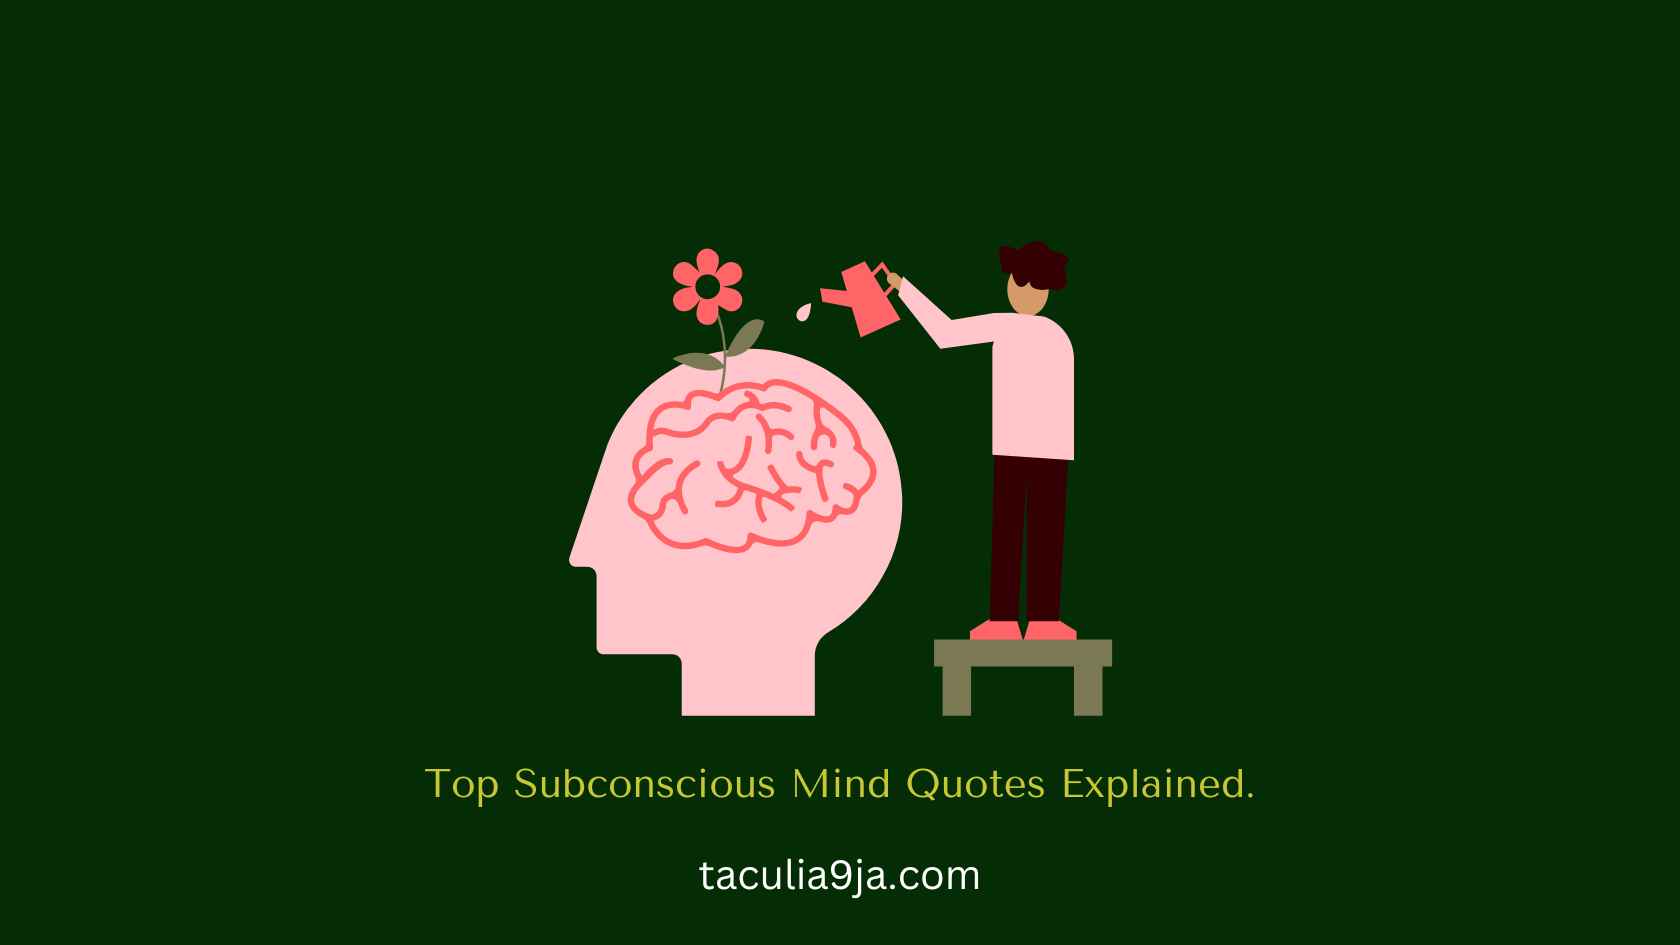 Top Subconscious Mind Quotes Explained.